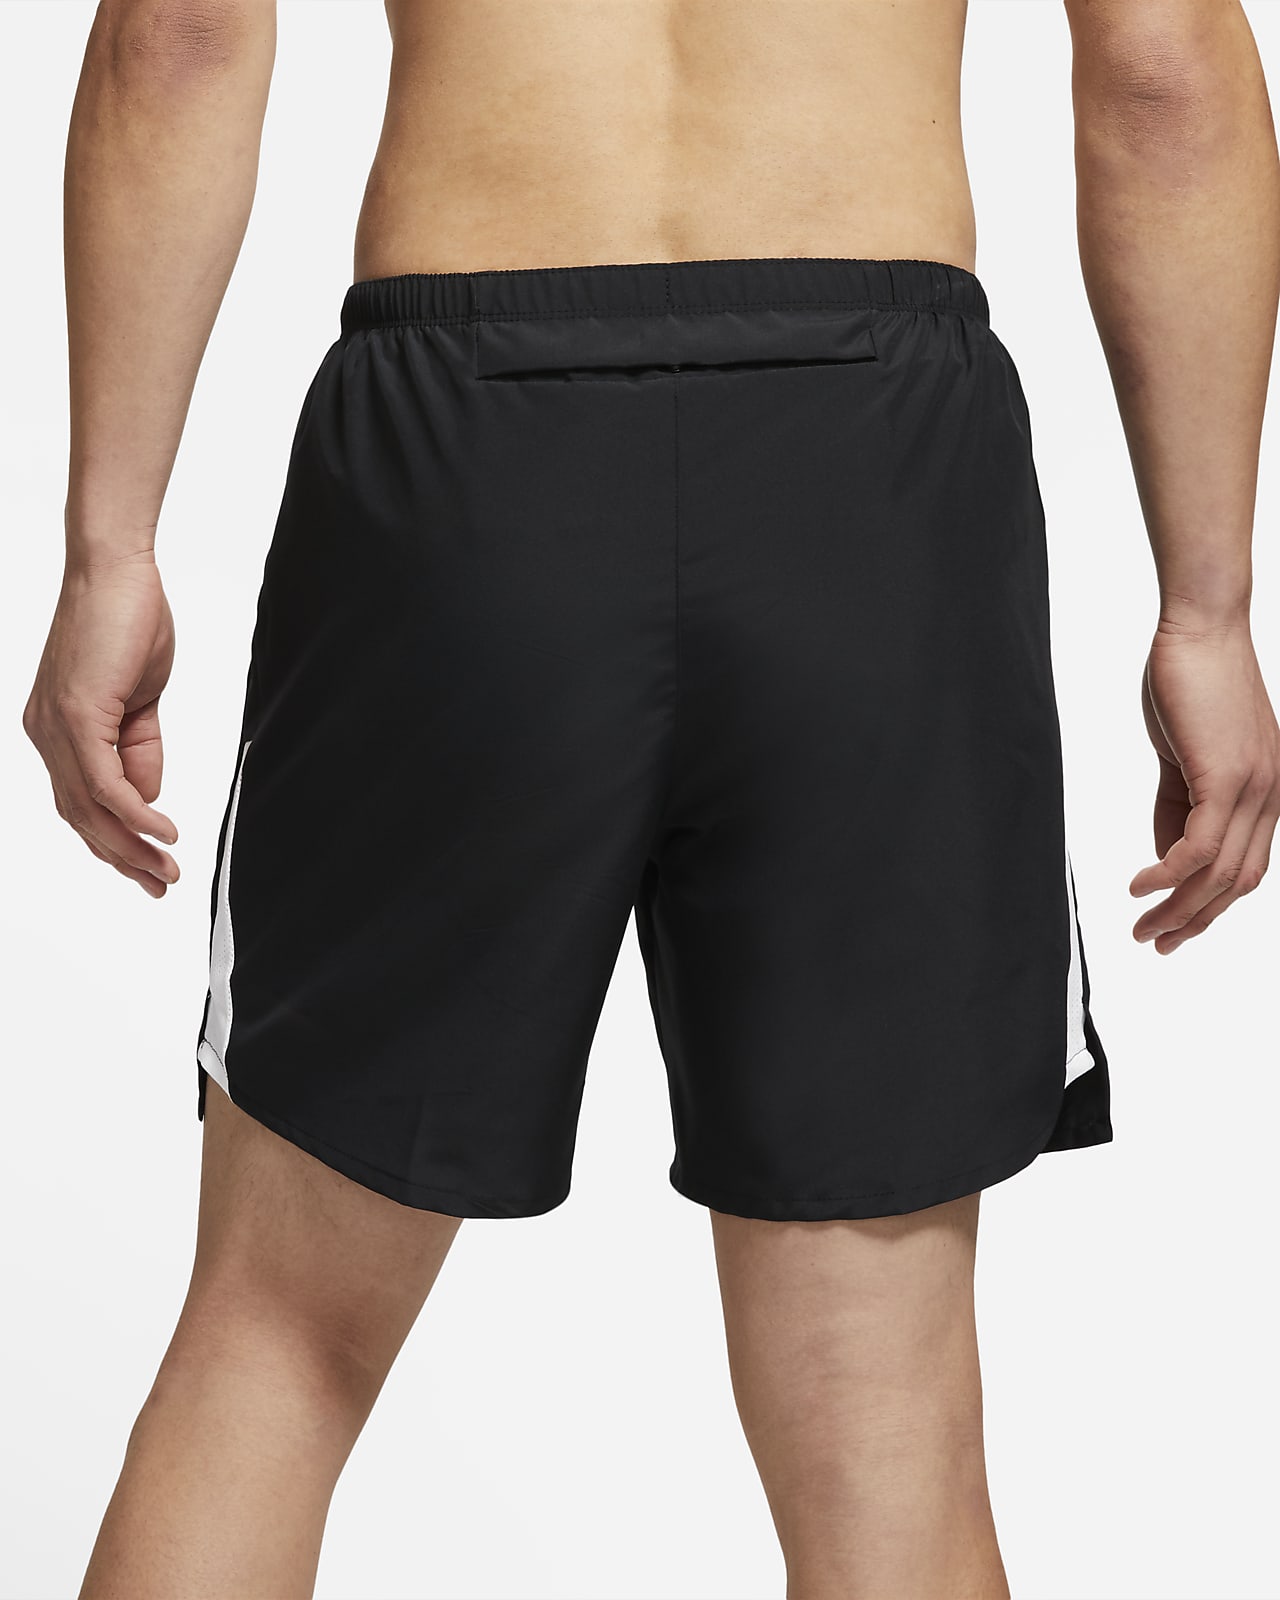 nike challenger 7 inch running shorts